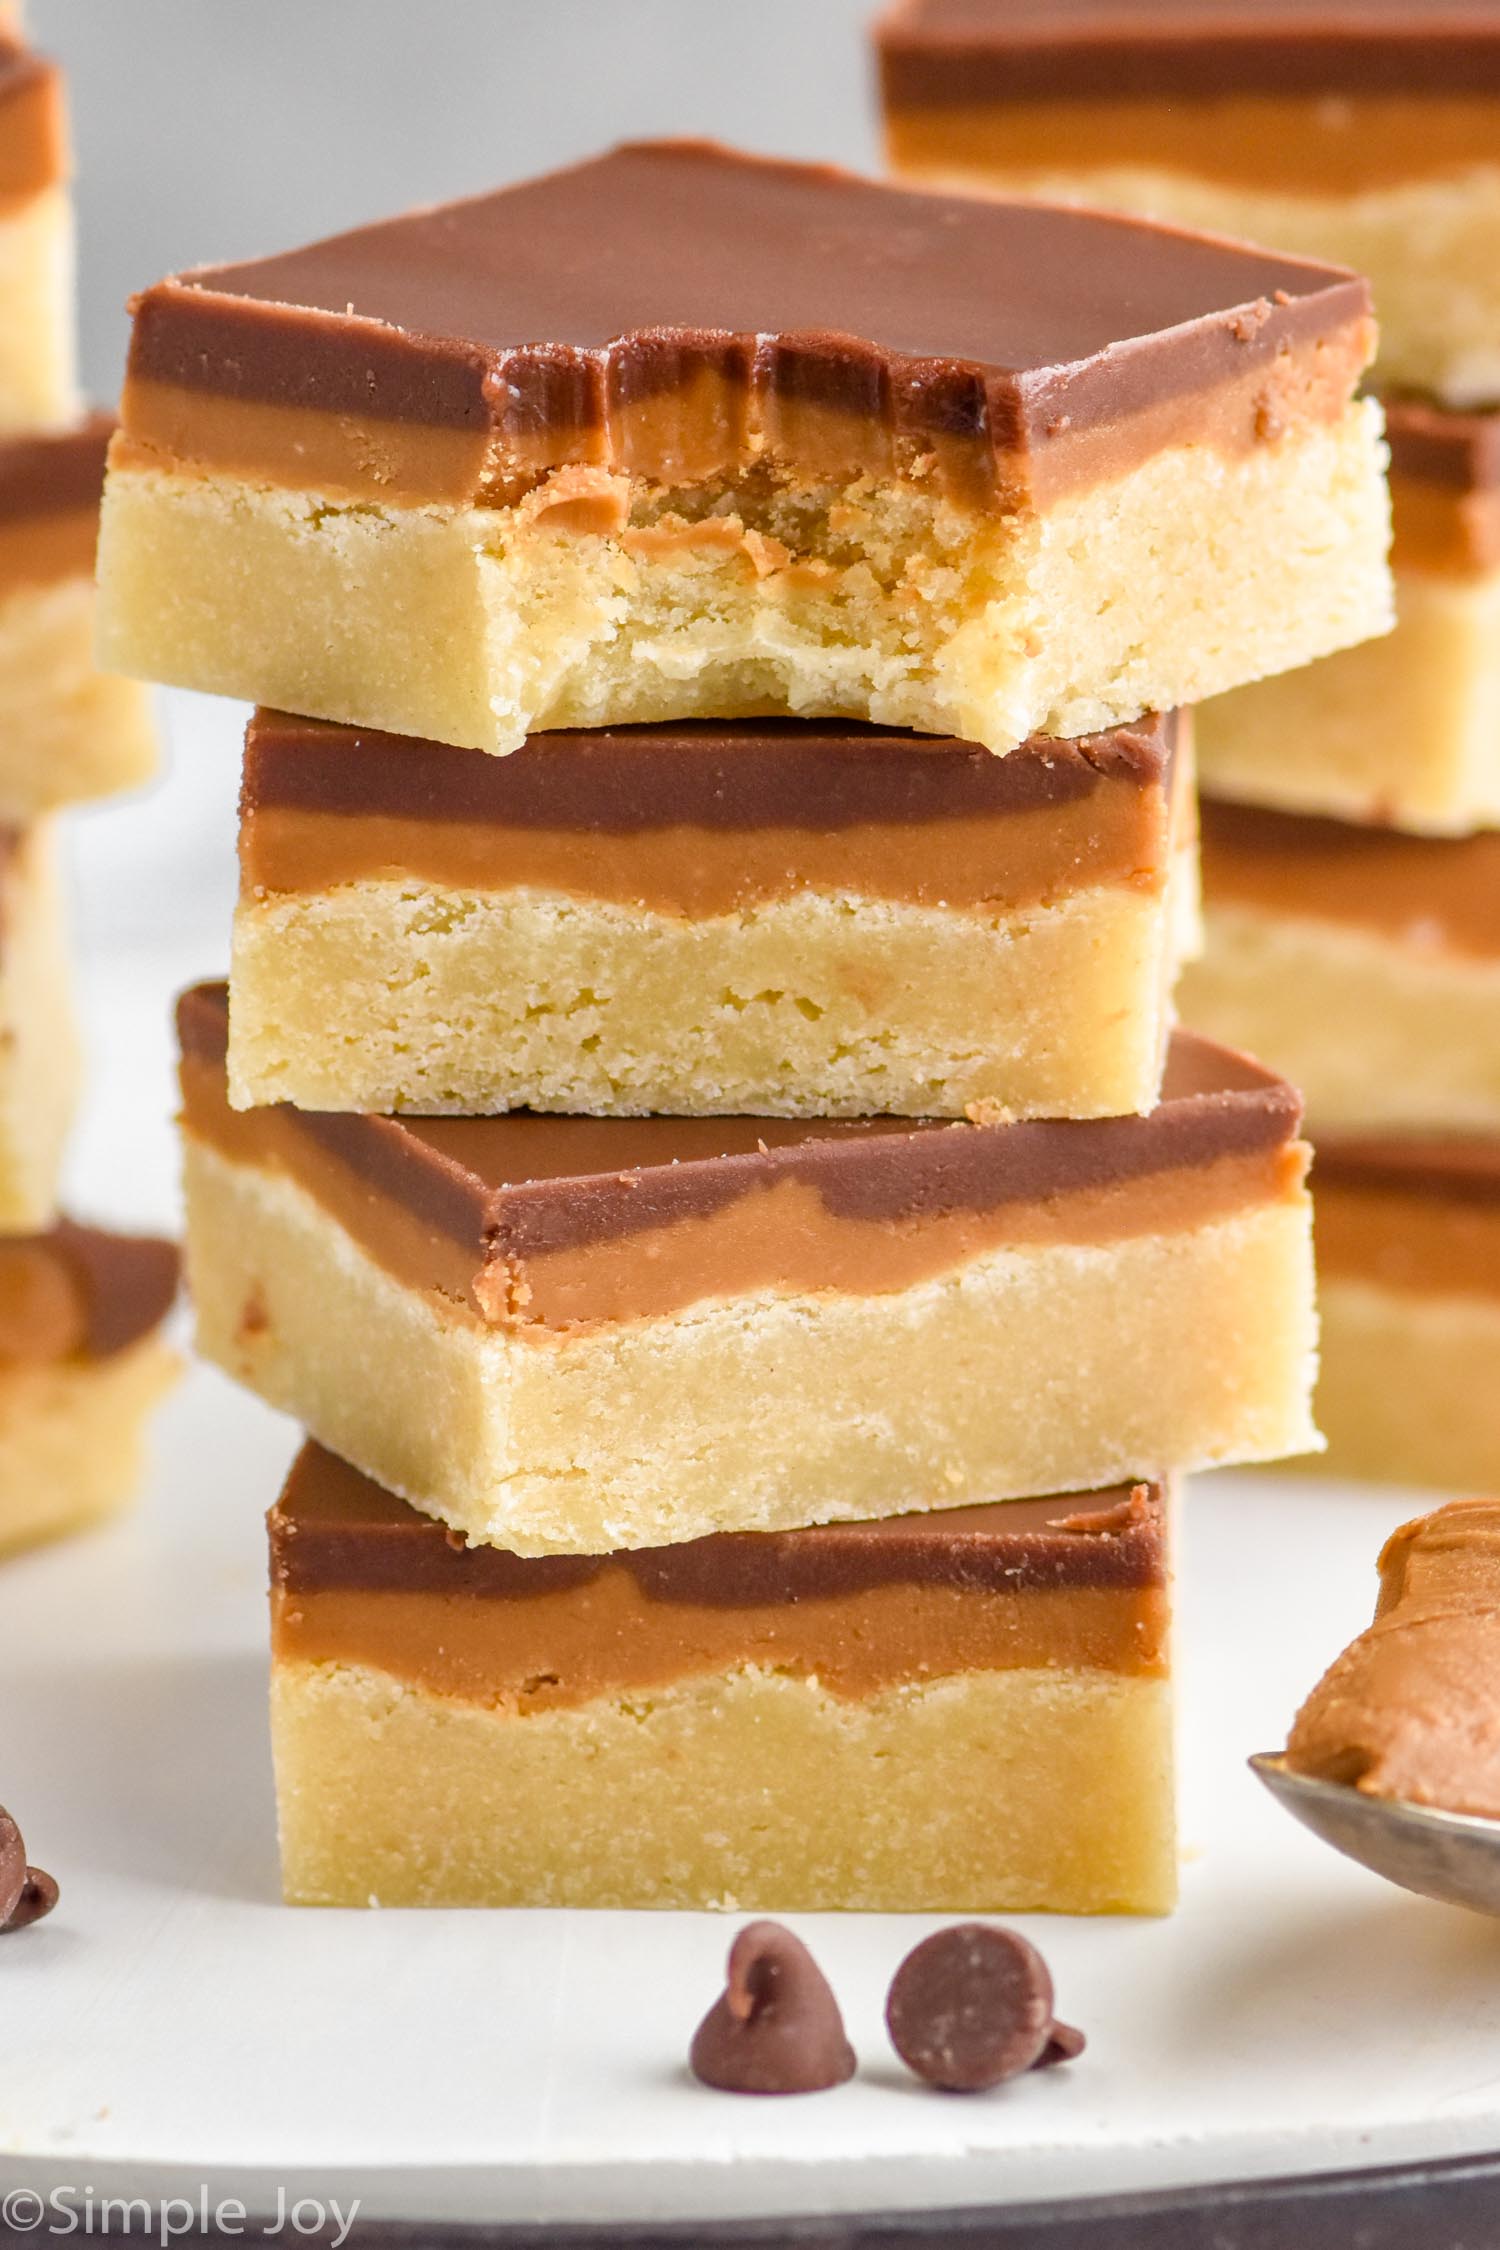 https://www.simplejoy.com/wp-content/uploads/2013/04/Sugar-Cookie-Cookie-Butter-Bars-8.jpg